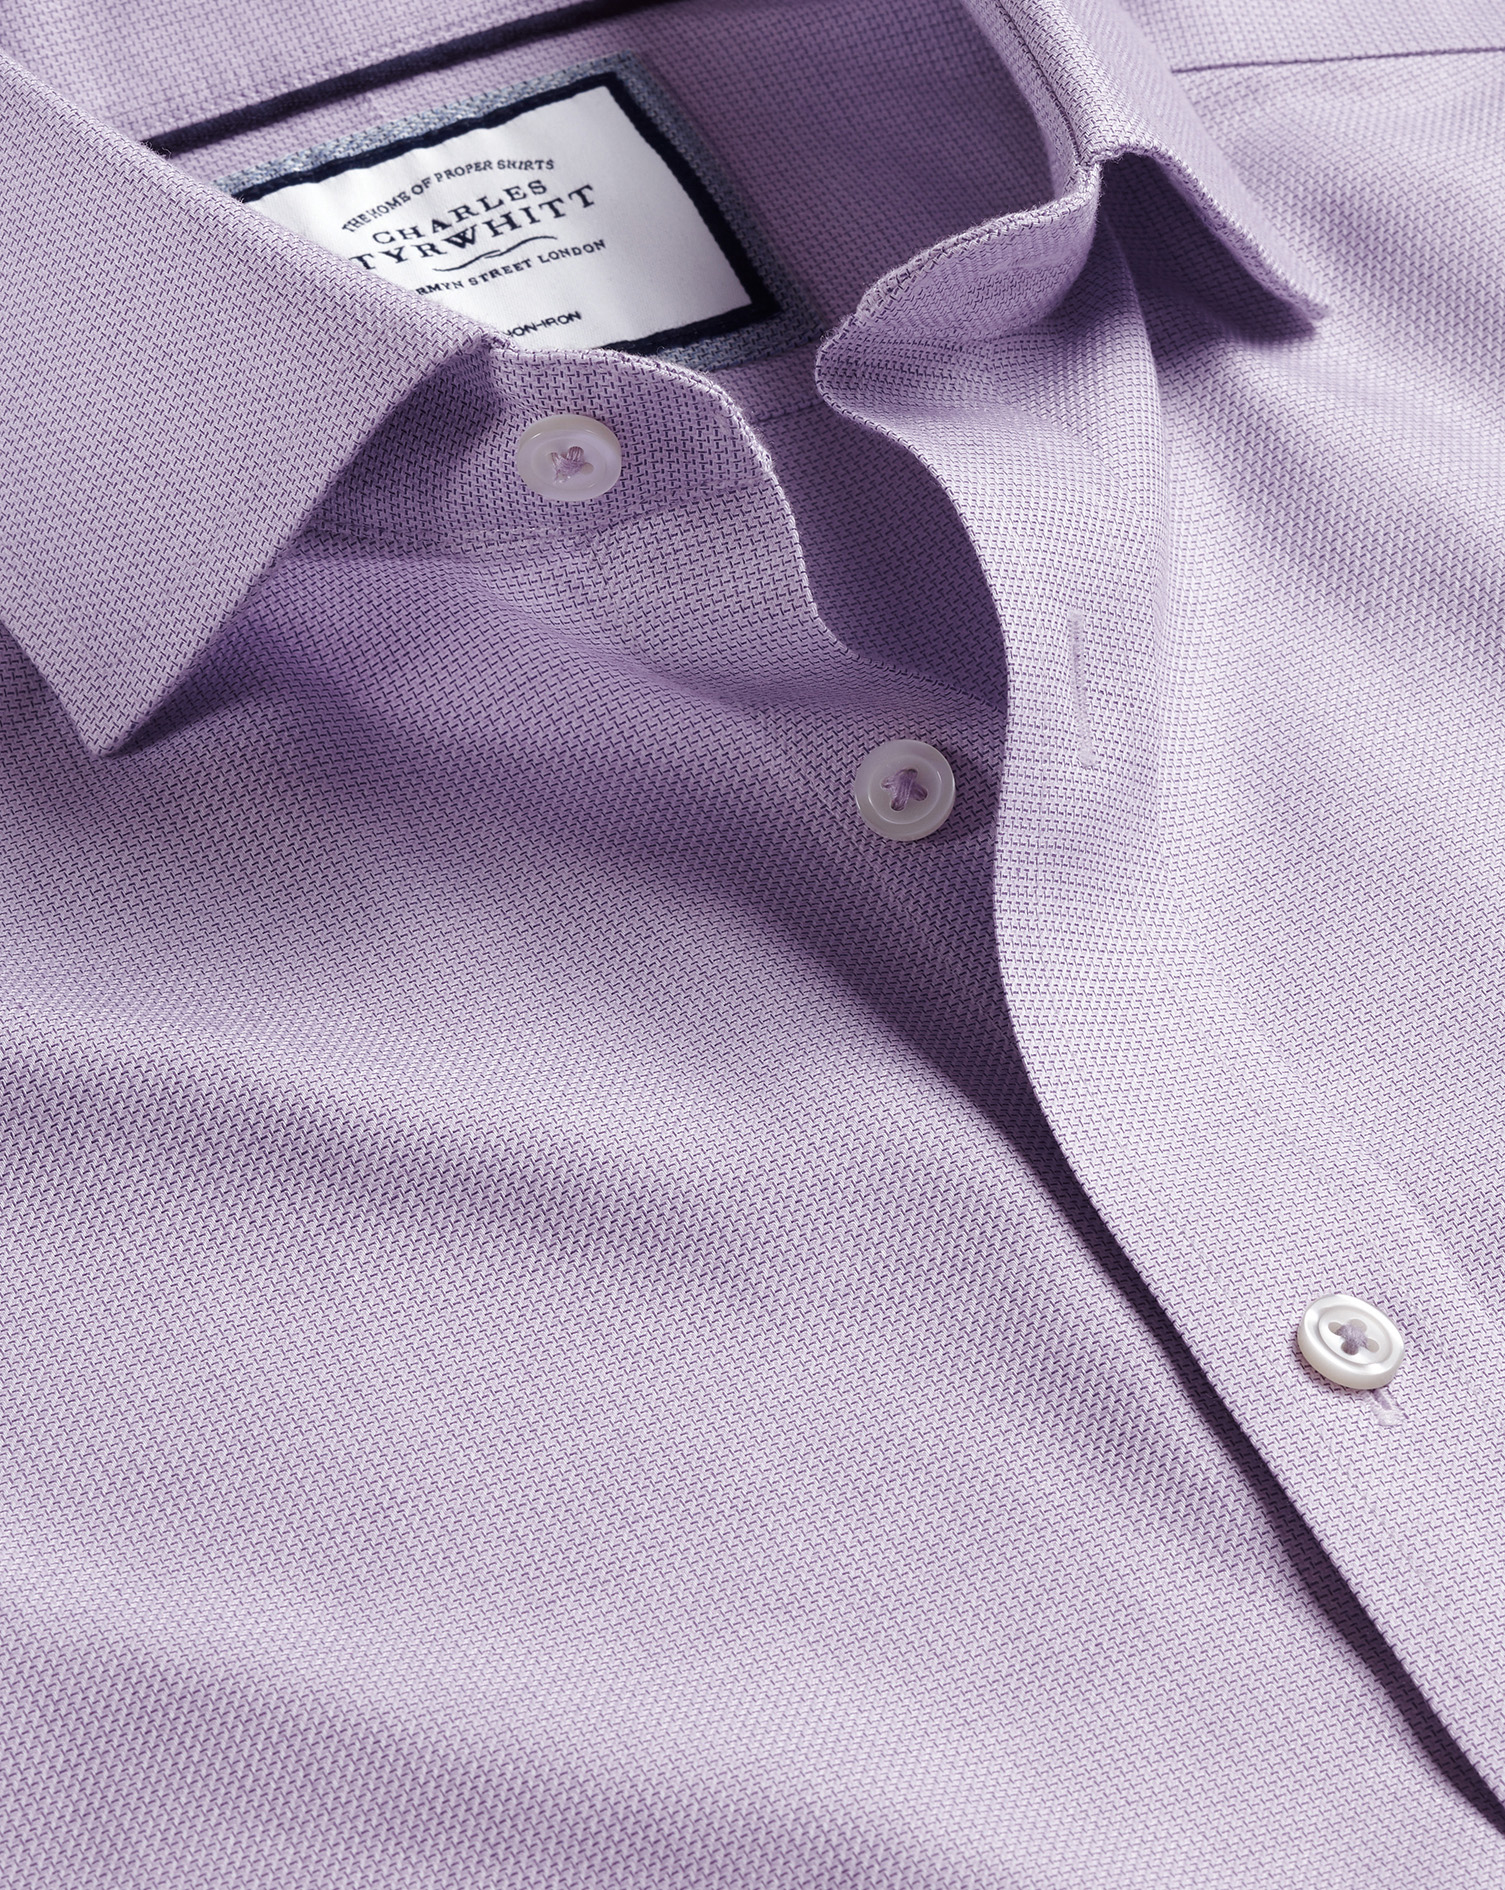 Men's Charles Tyrwhitt Cutaway Collar Non-Iron Richmond Weave Dress Shirt - Mauve Purple French Cuff